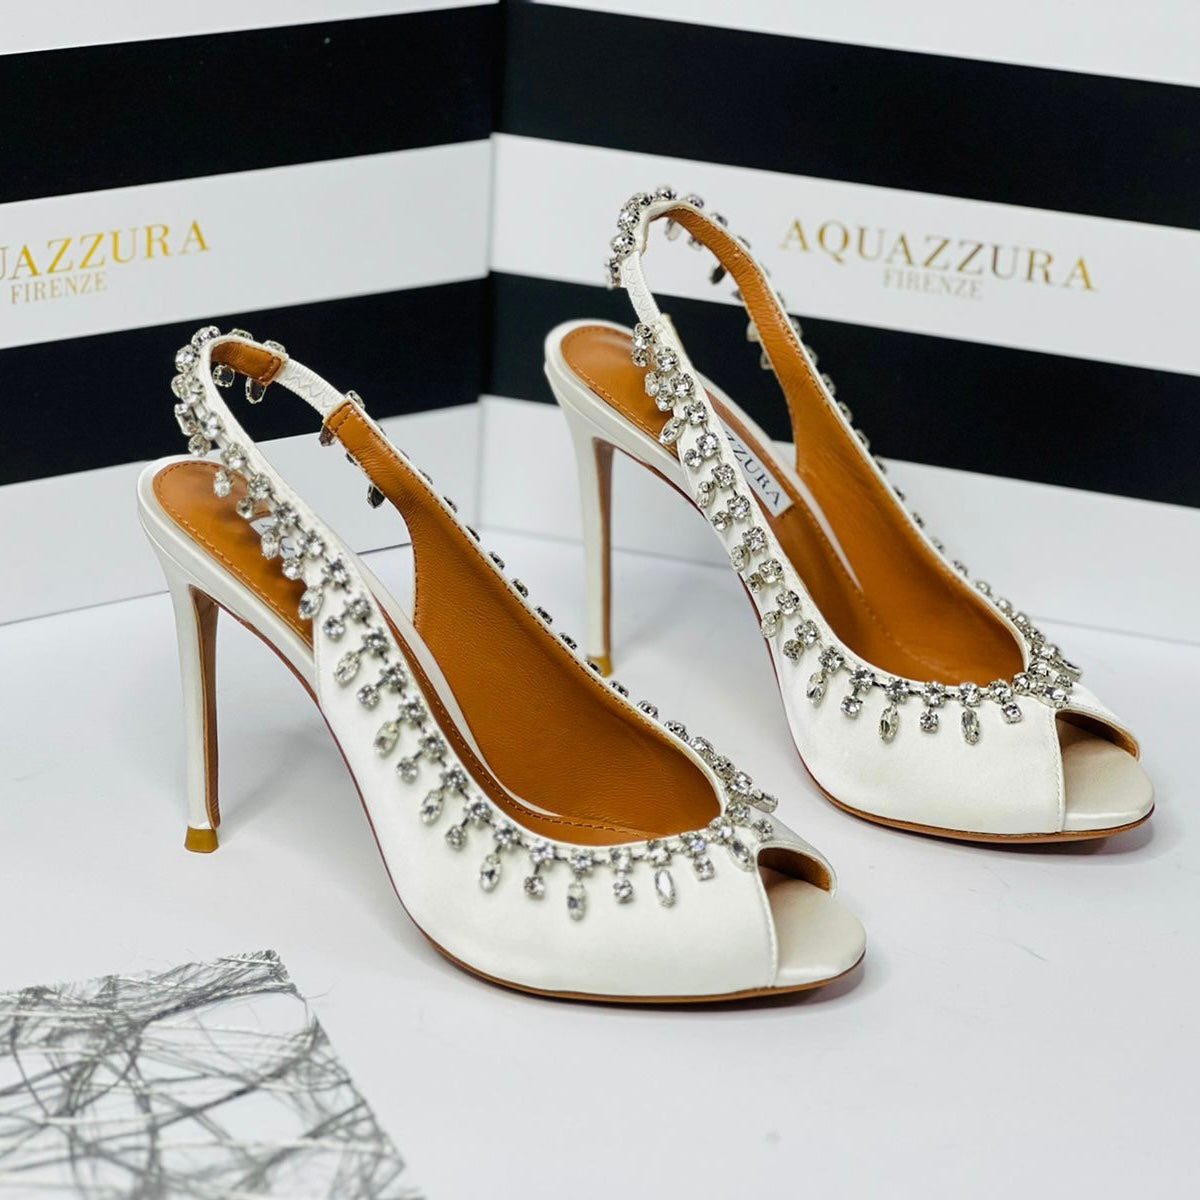 Aquazzura Style #1 Shoes